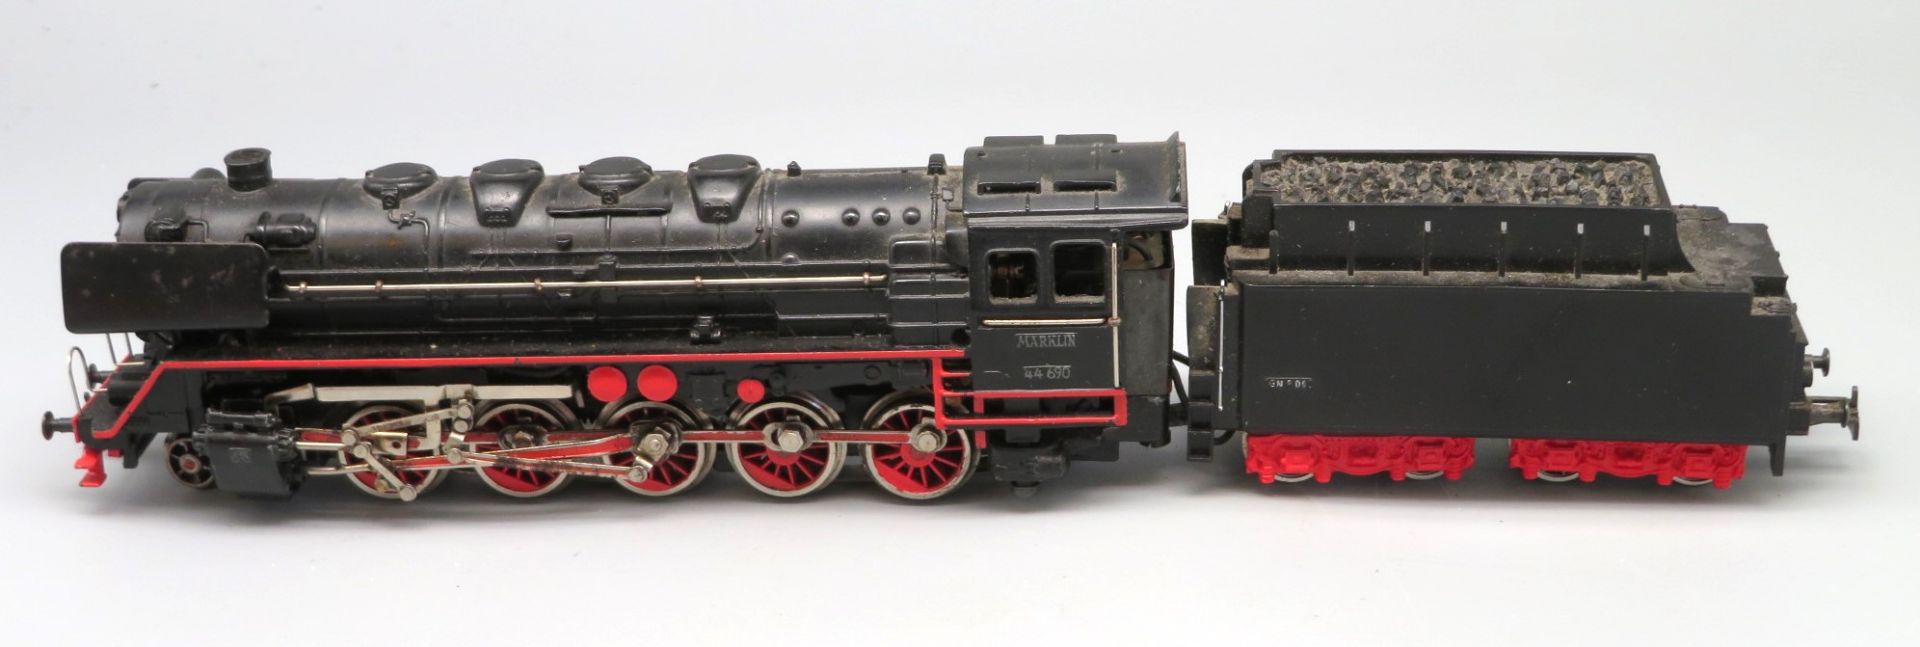 Schlepptender-Dampf-Lokomotive, Märklin, Spur HO, analog, 44690/BR44/GN800, Produktionsjahr 1956 -